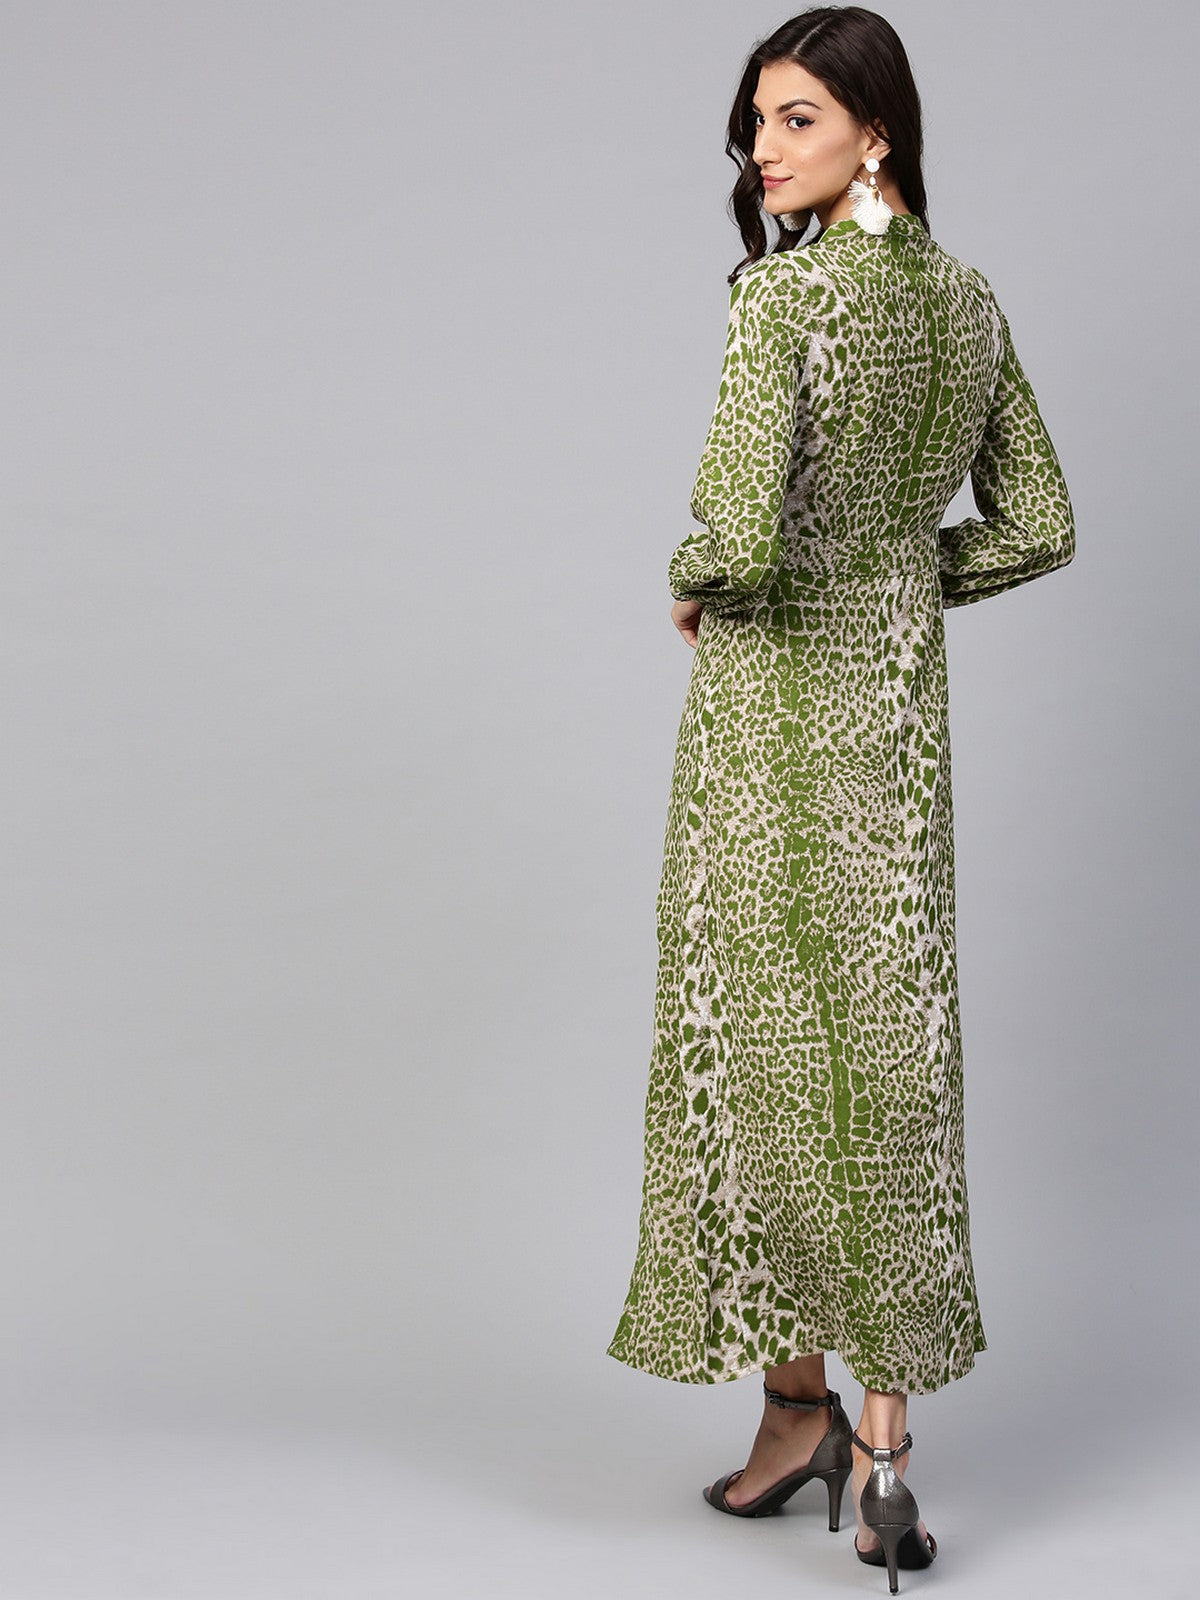 Light Green Animal Print Maxi Dress With Embellished Brotch